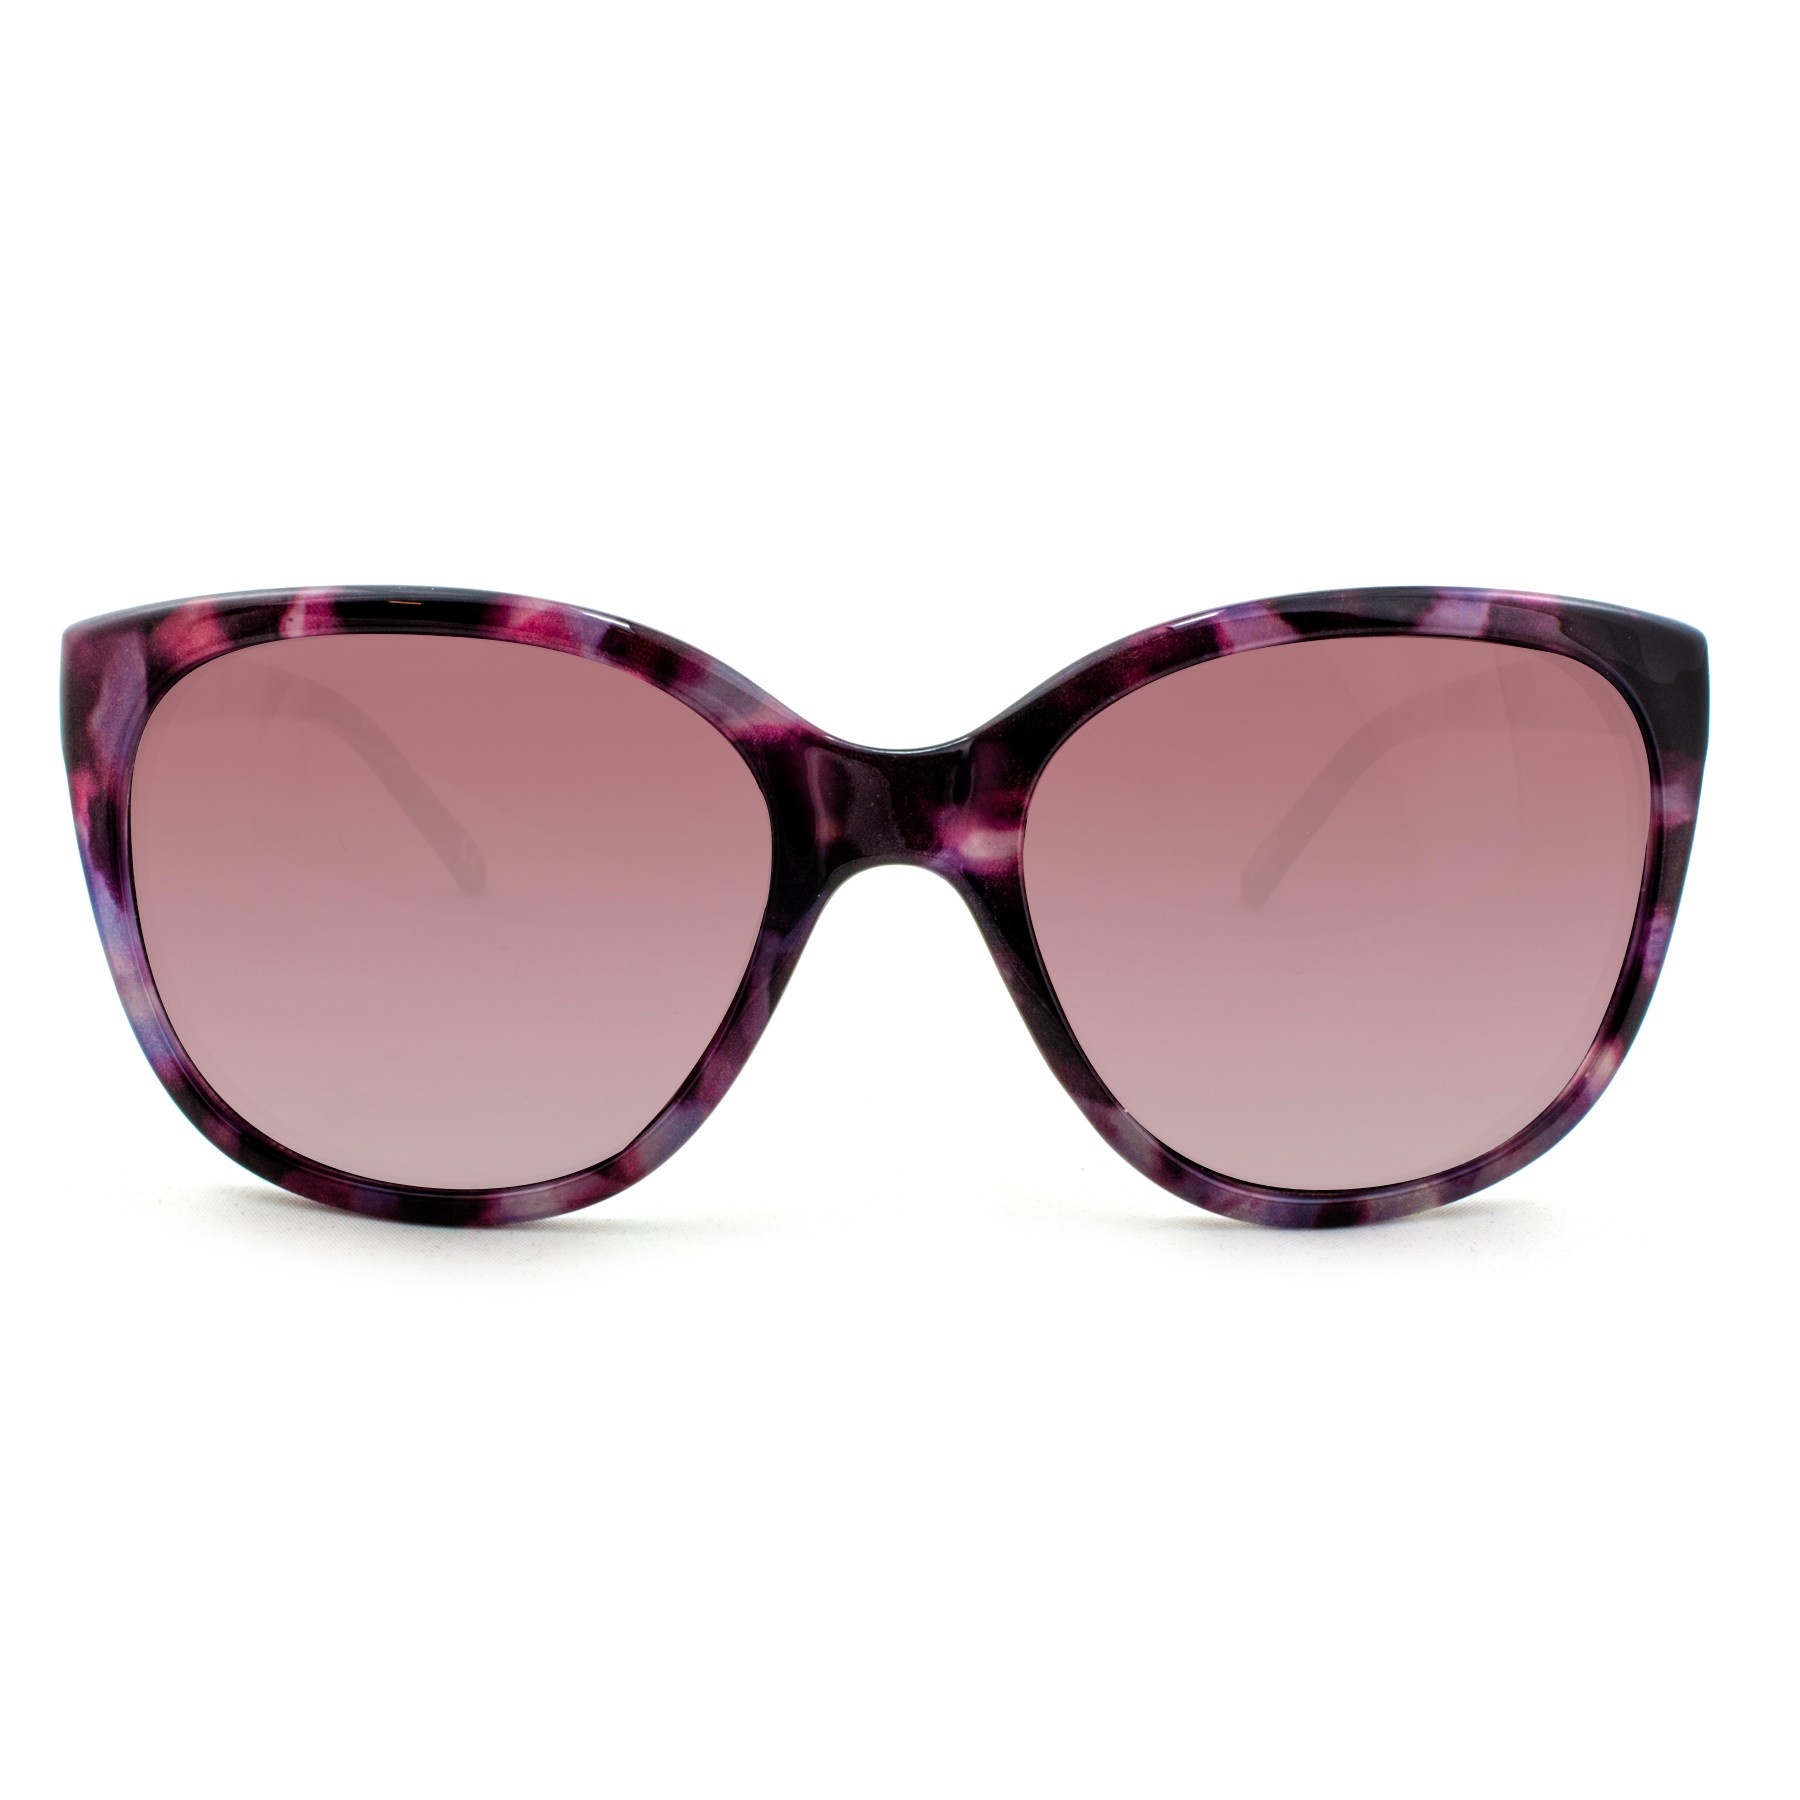 slide 1 of 3, Women's Tortoise Shell Print Square Sunglasses - A New Day Purple, 1 ct